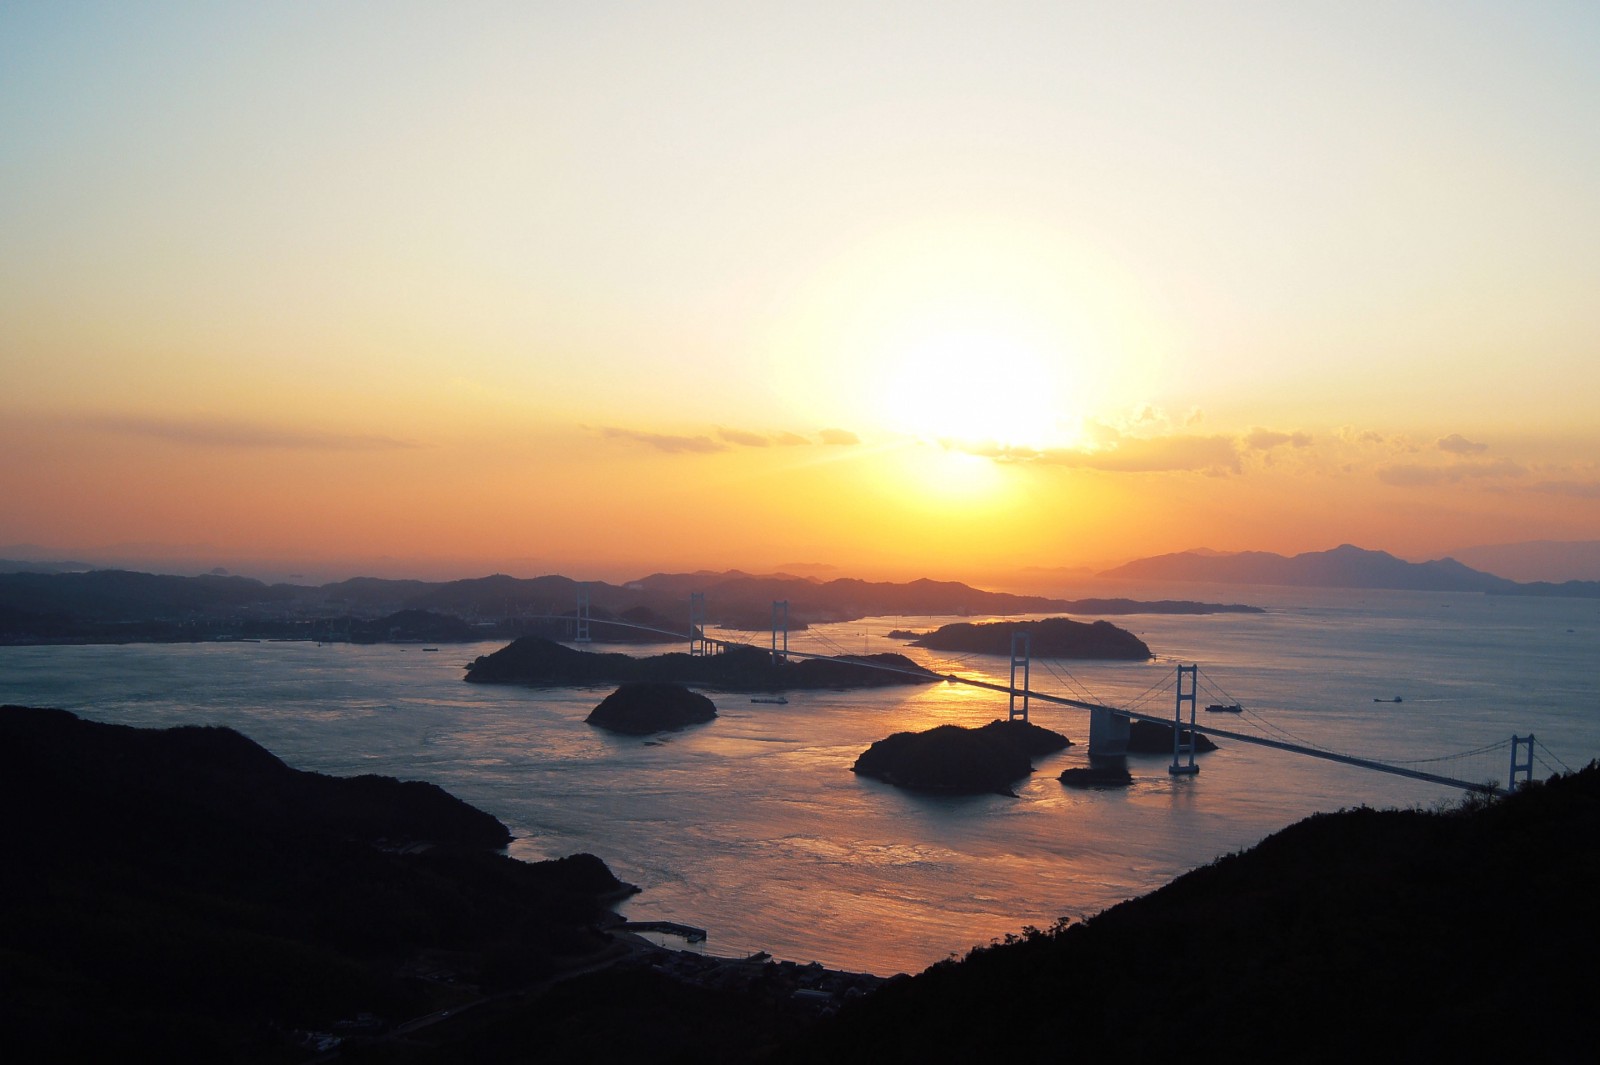 The astonishing sunset view of the Seto Inland Sea